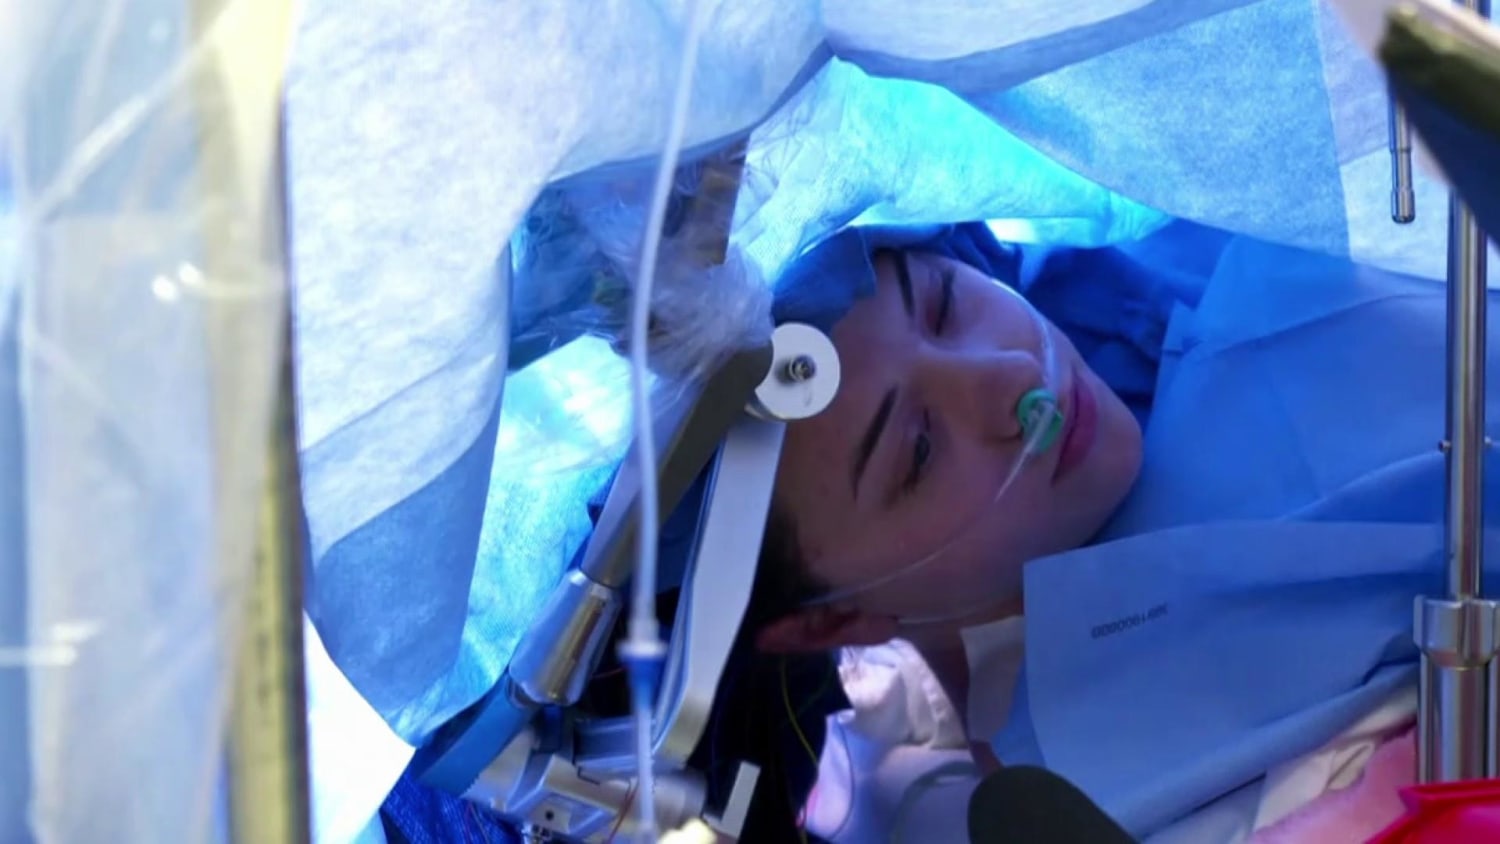 Woman's awake brain surgery livestreamed on Facebook